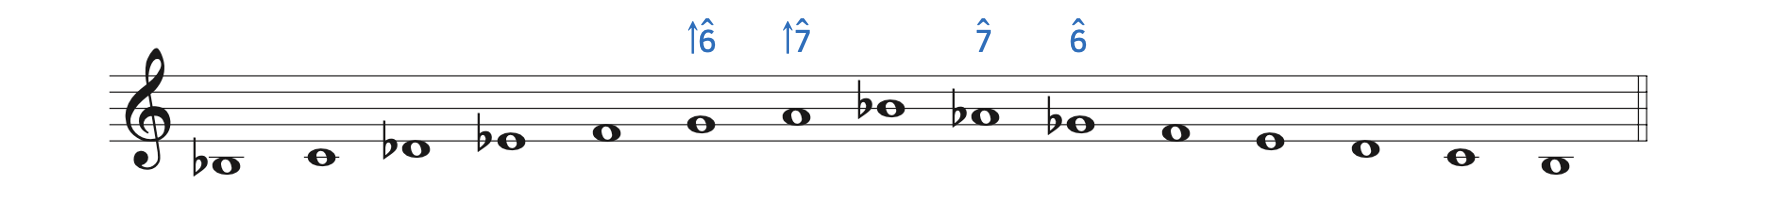 B-flat ascending and descending melodic minor scale with G and A while ascending, and A-flat and G-flat while descending.